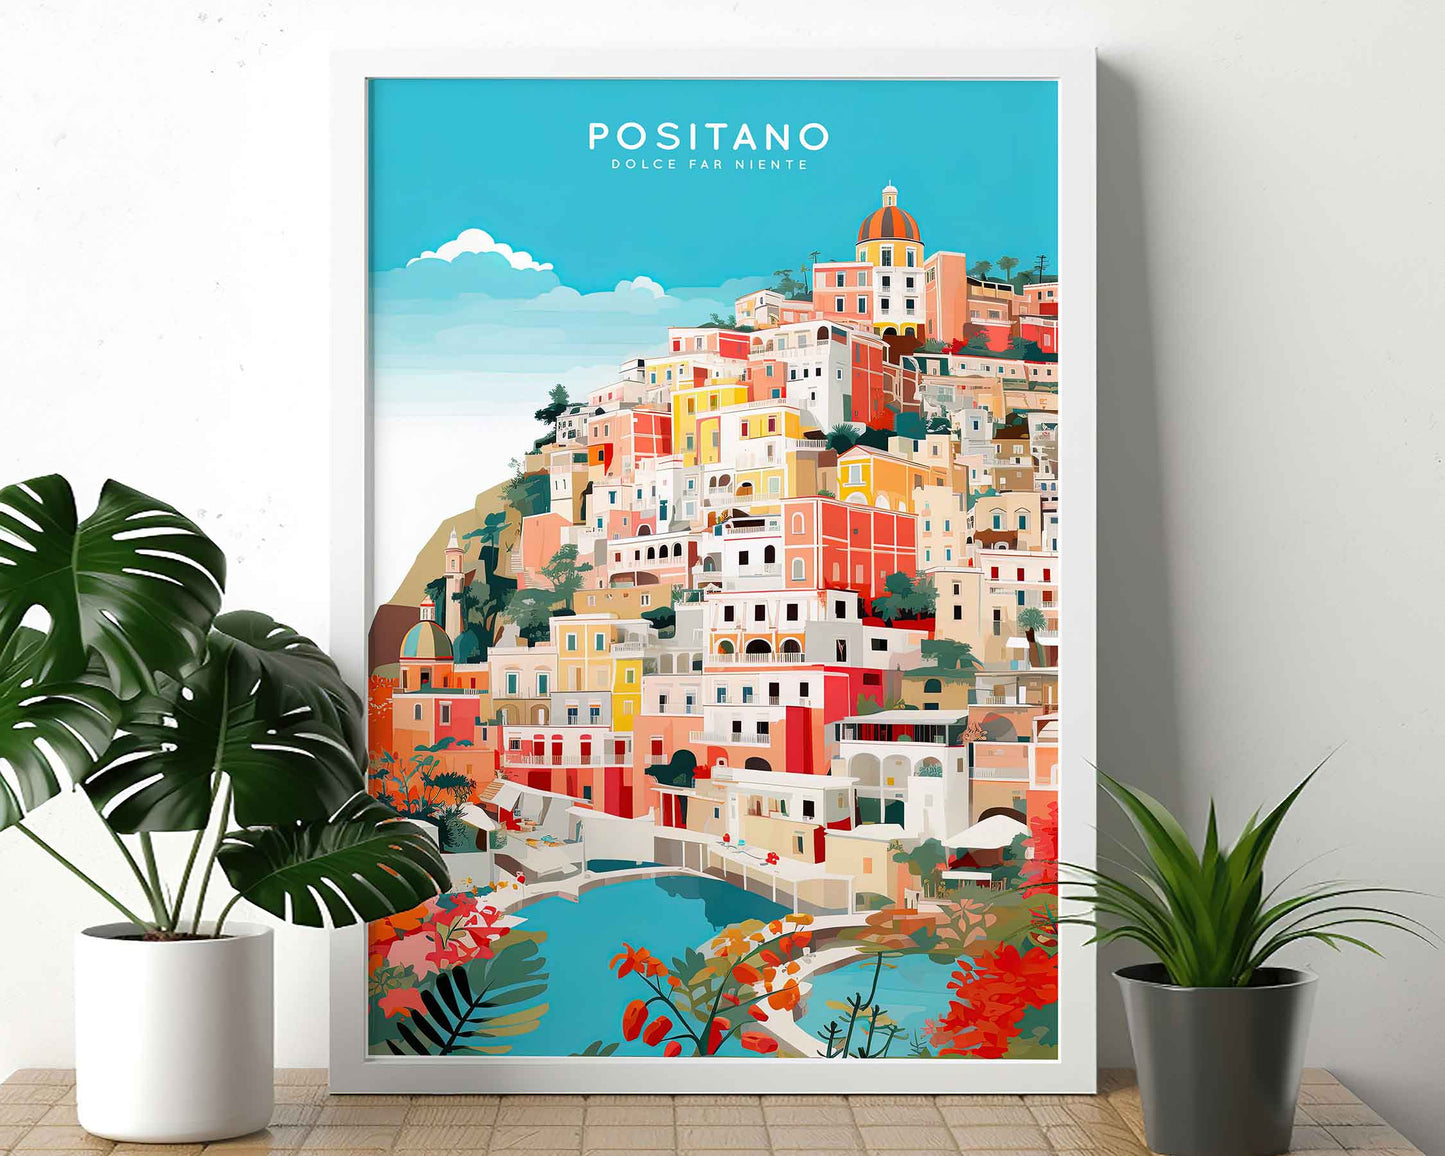 Framed Image of Positano Italy Travel Wall Art Poster Prints Illustration